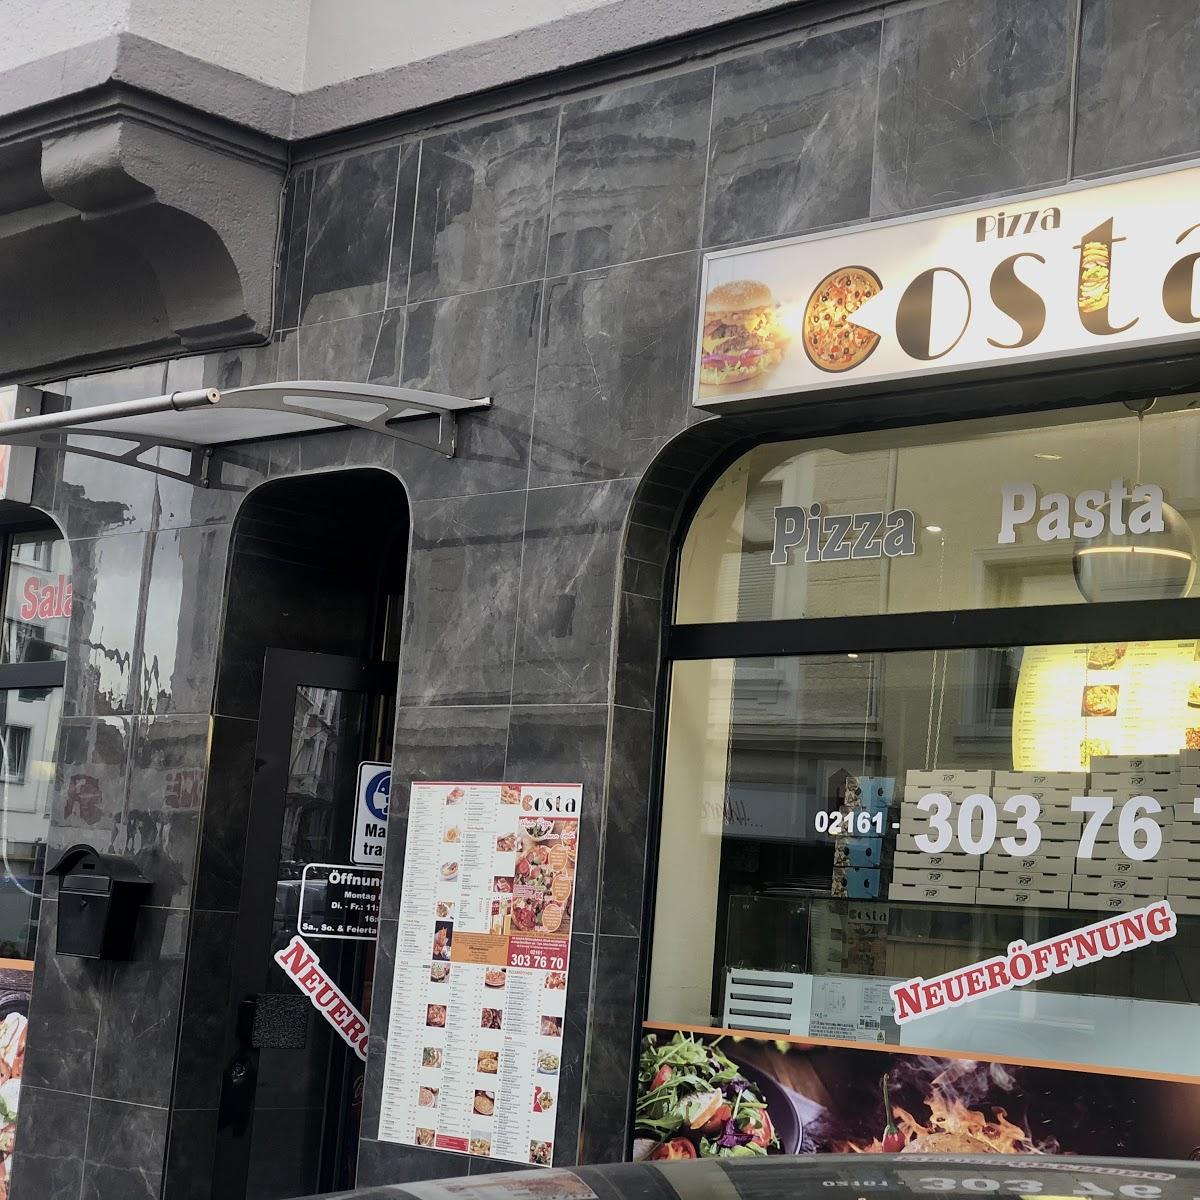 Restaurant "Pizza Costa" in Mönchengladbach